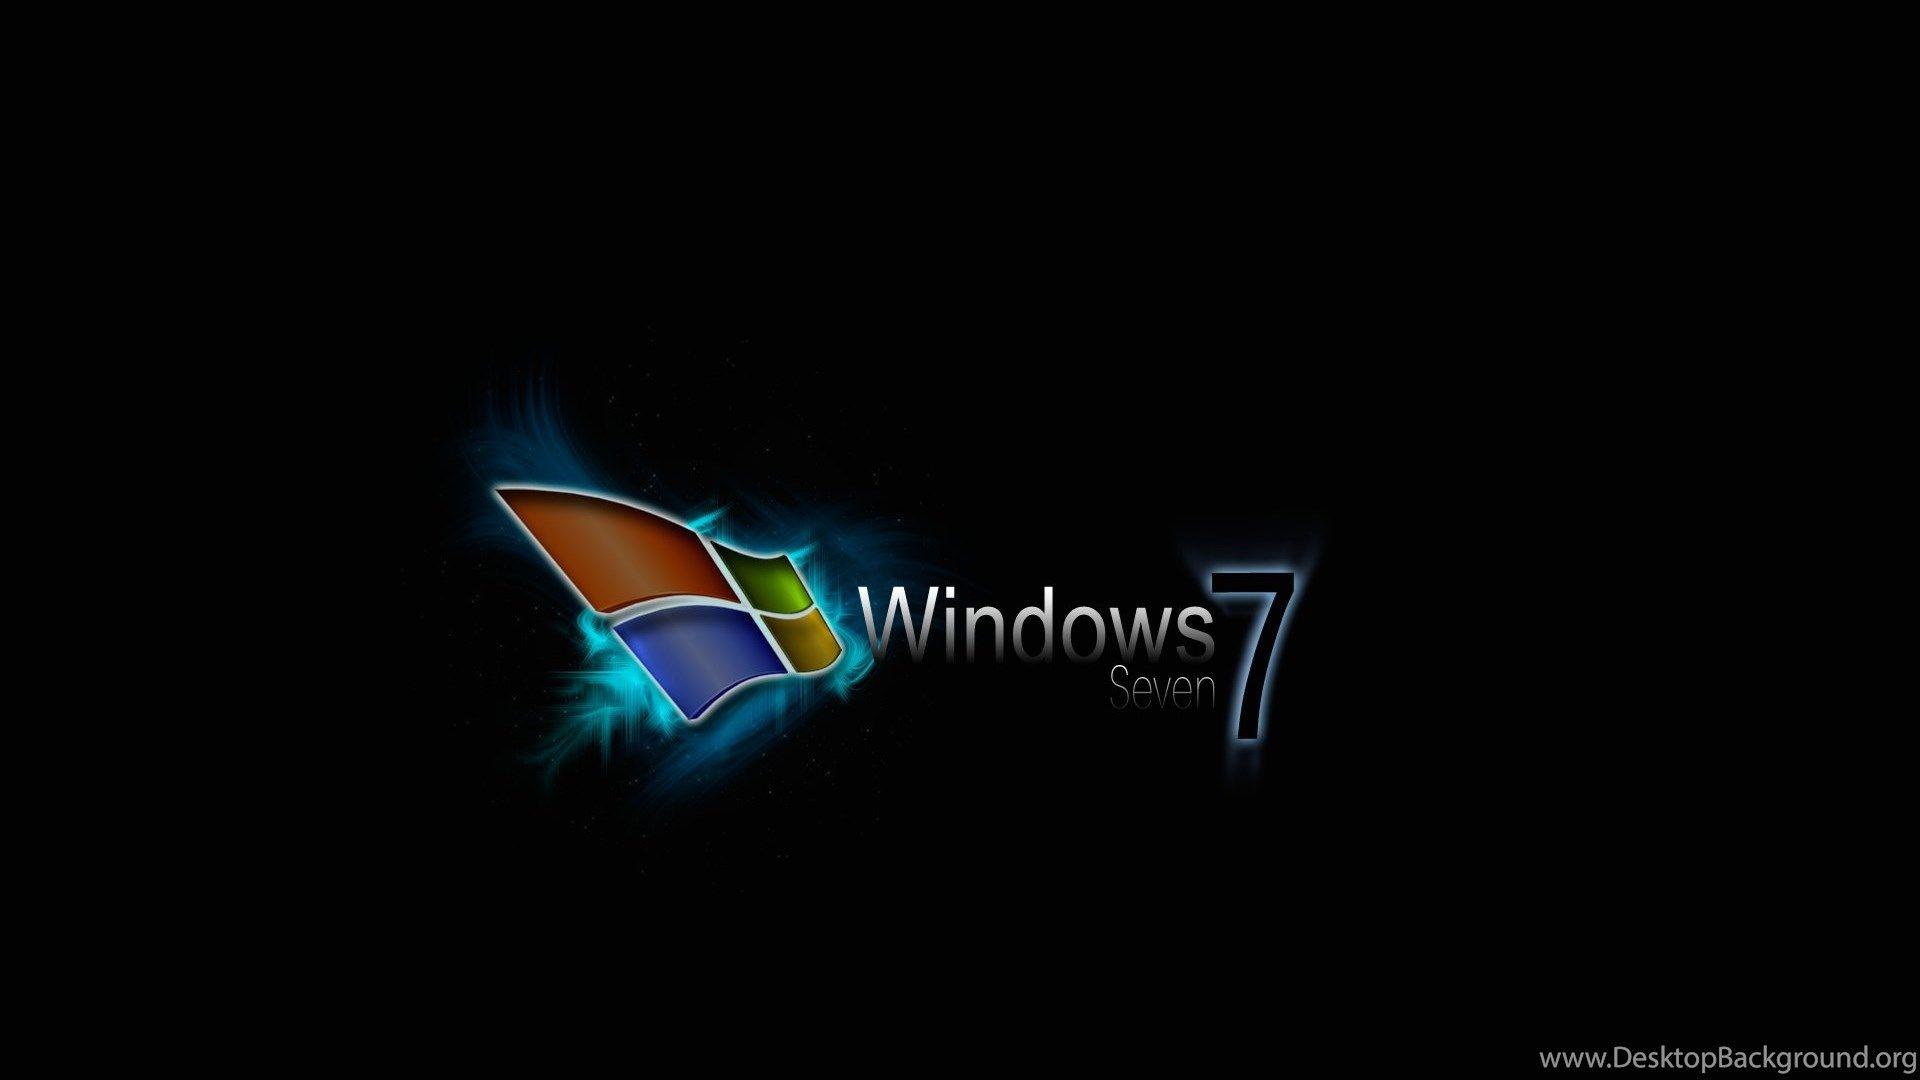 Windows 7 Ultimate HD Wallpaper, Windows 7 Ultimate Wallpaper